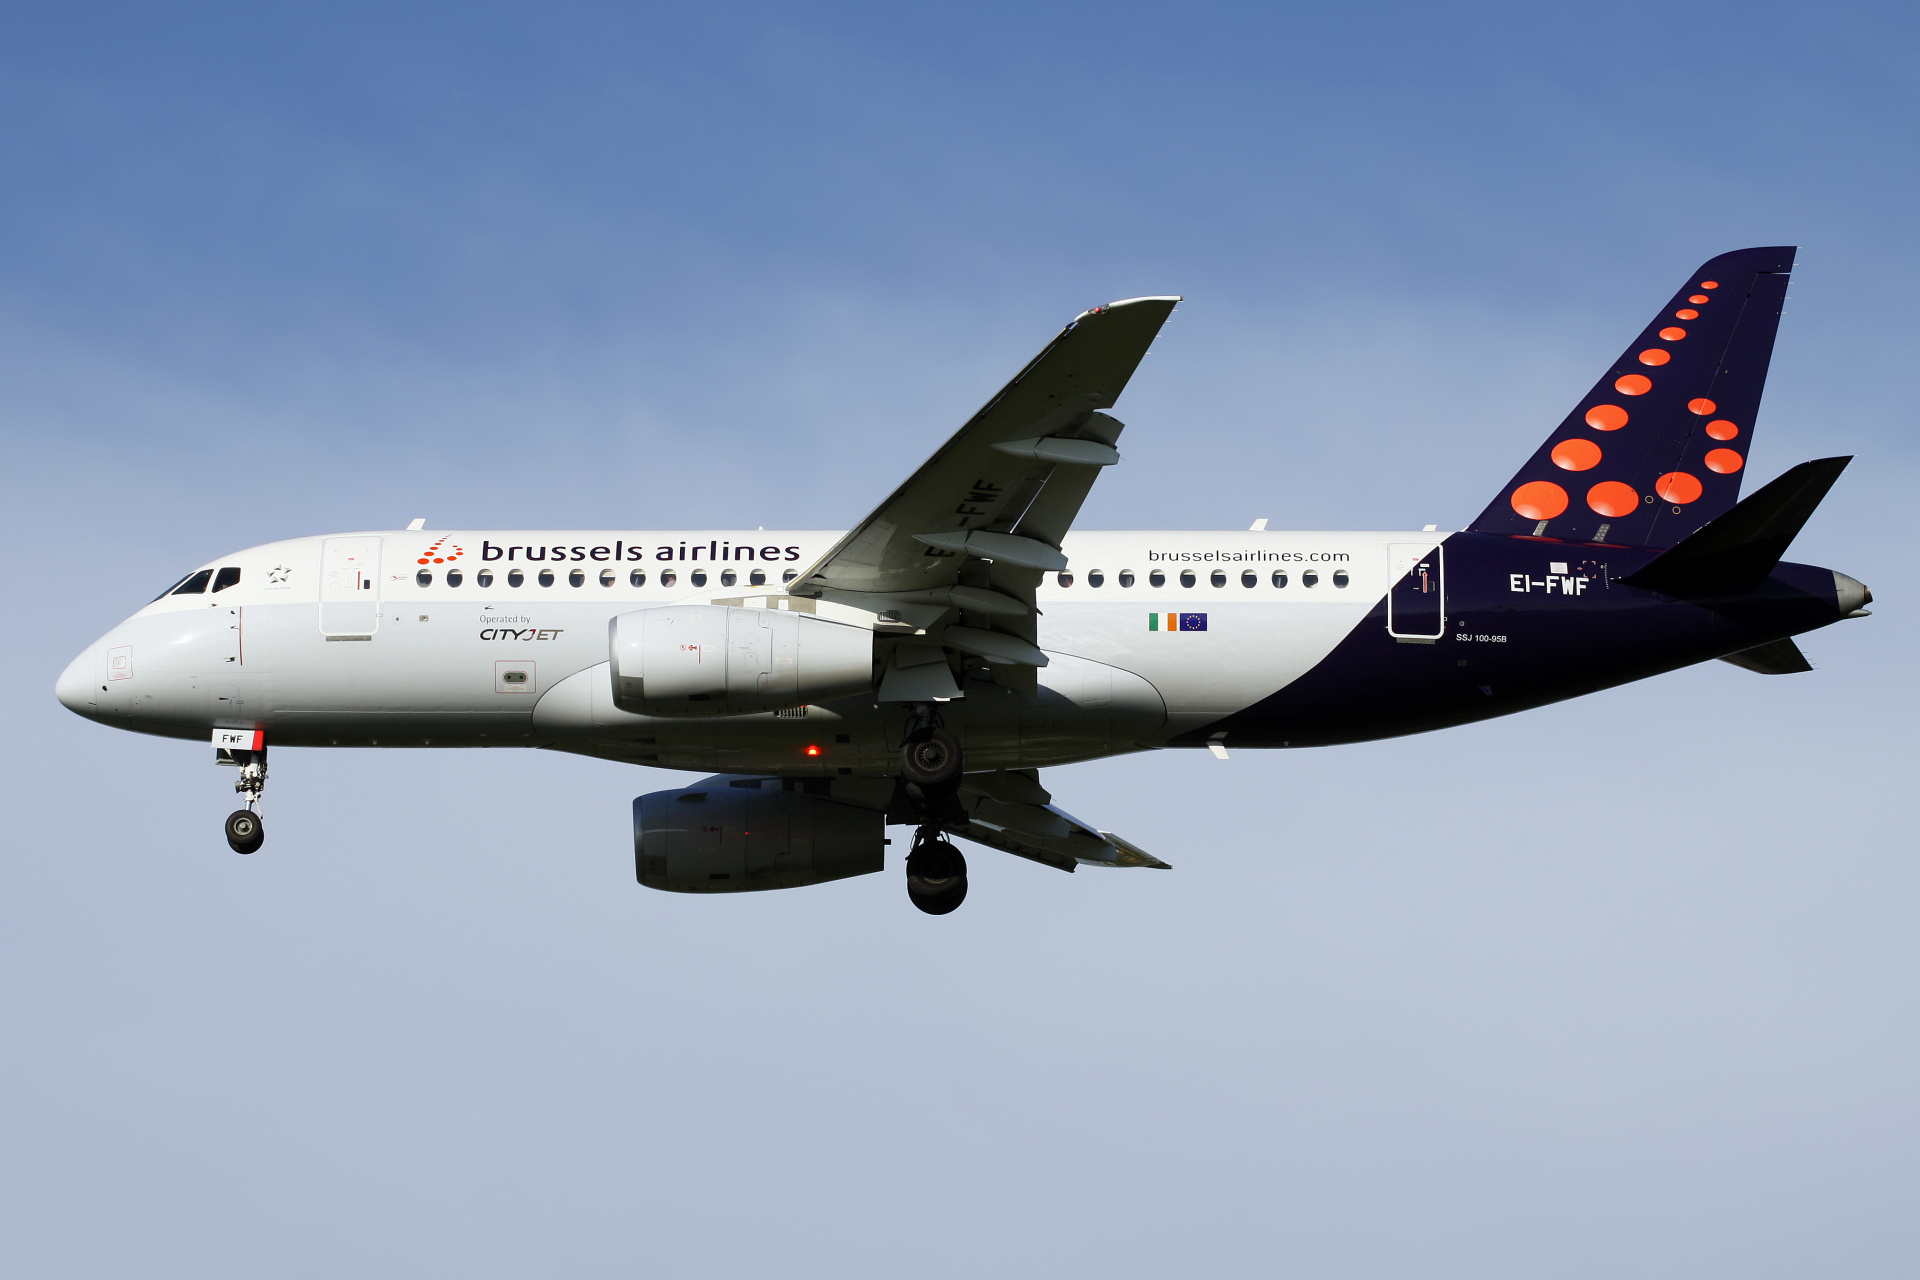 EI-FWF, Brussels Airlines (CityJet) (Aircraft » EPWA Spotting » Sukhoi Superjet 100-95B)